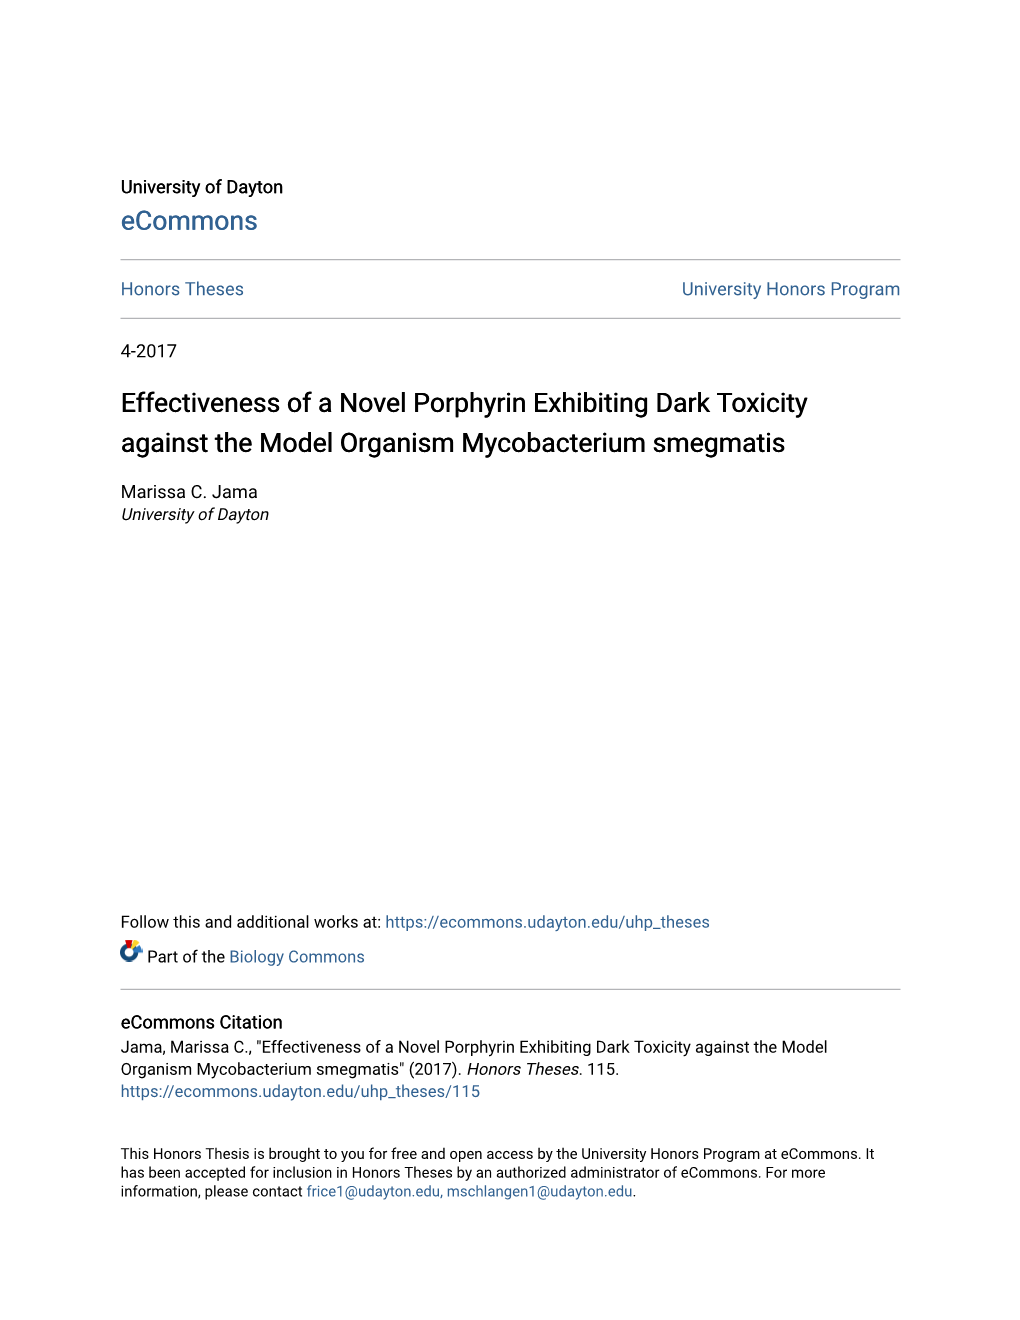 Effectiveness of a Novel Porphyrin Exhibiting Dark Toxicity Against the Model Organism Mycobacterium Smegmatis